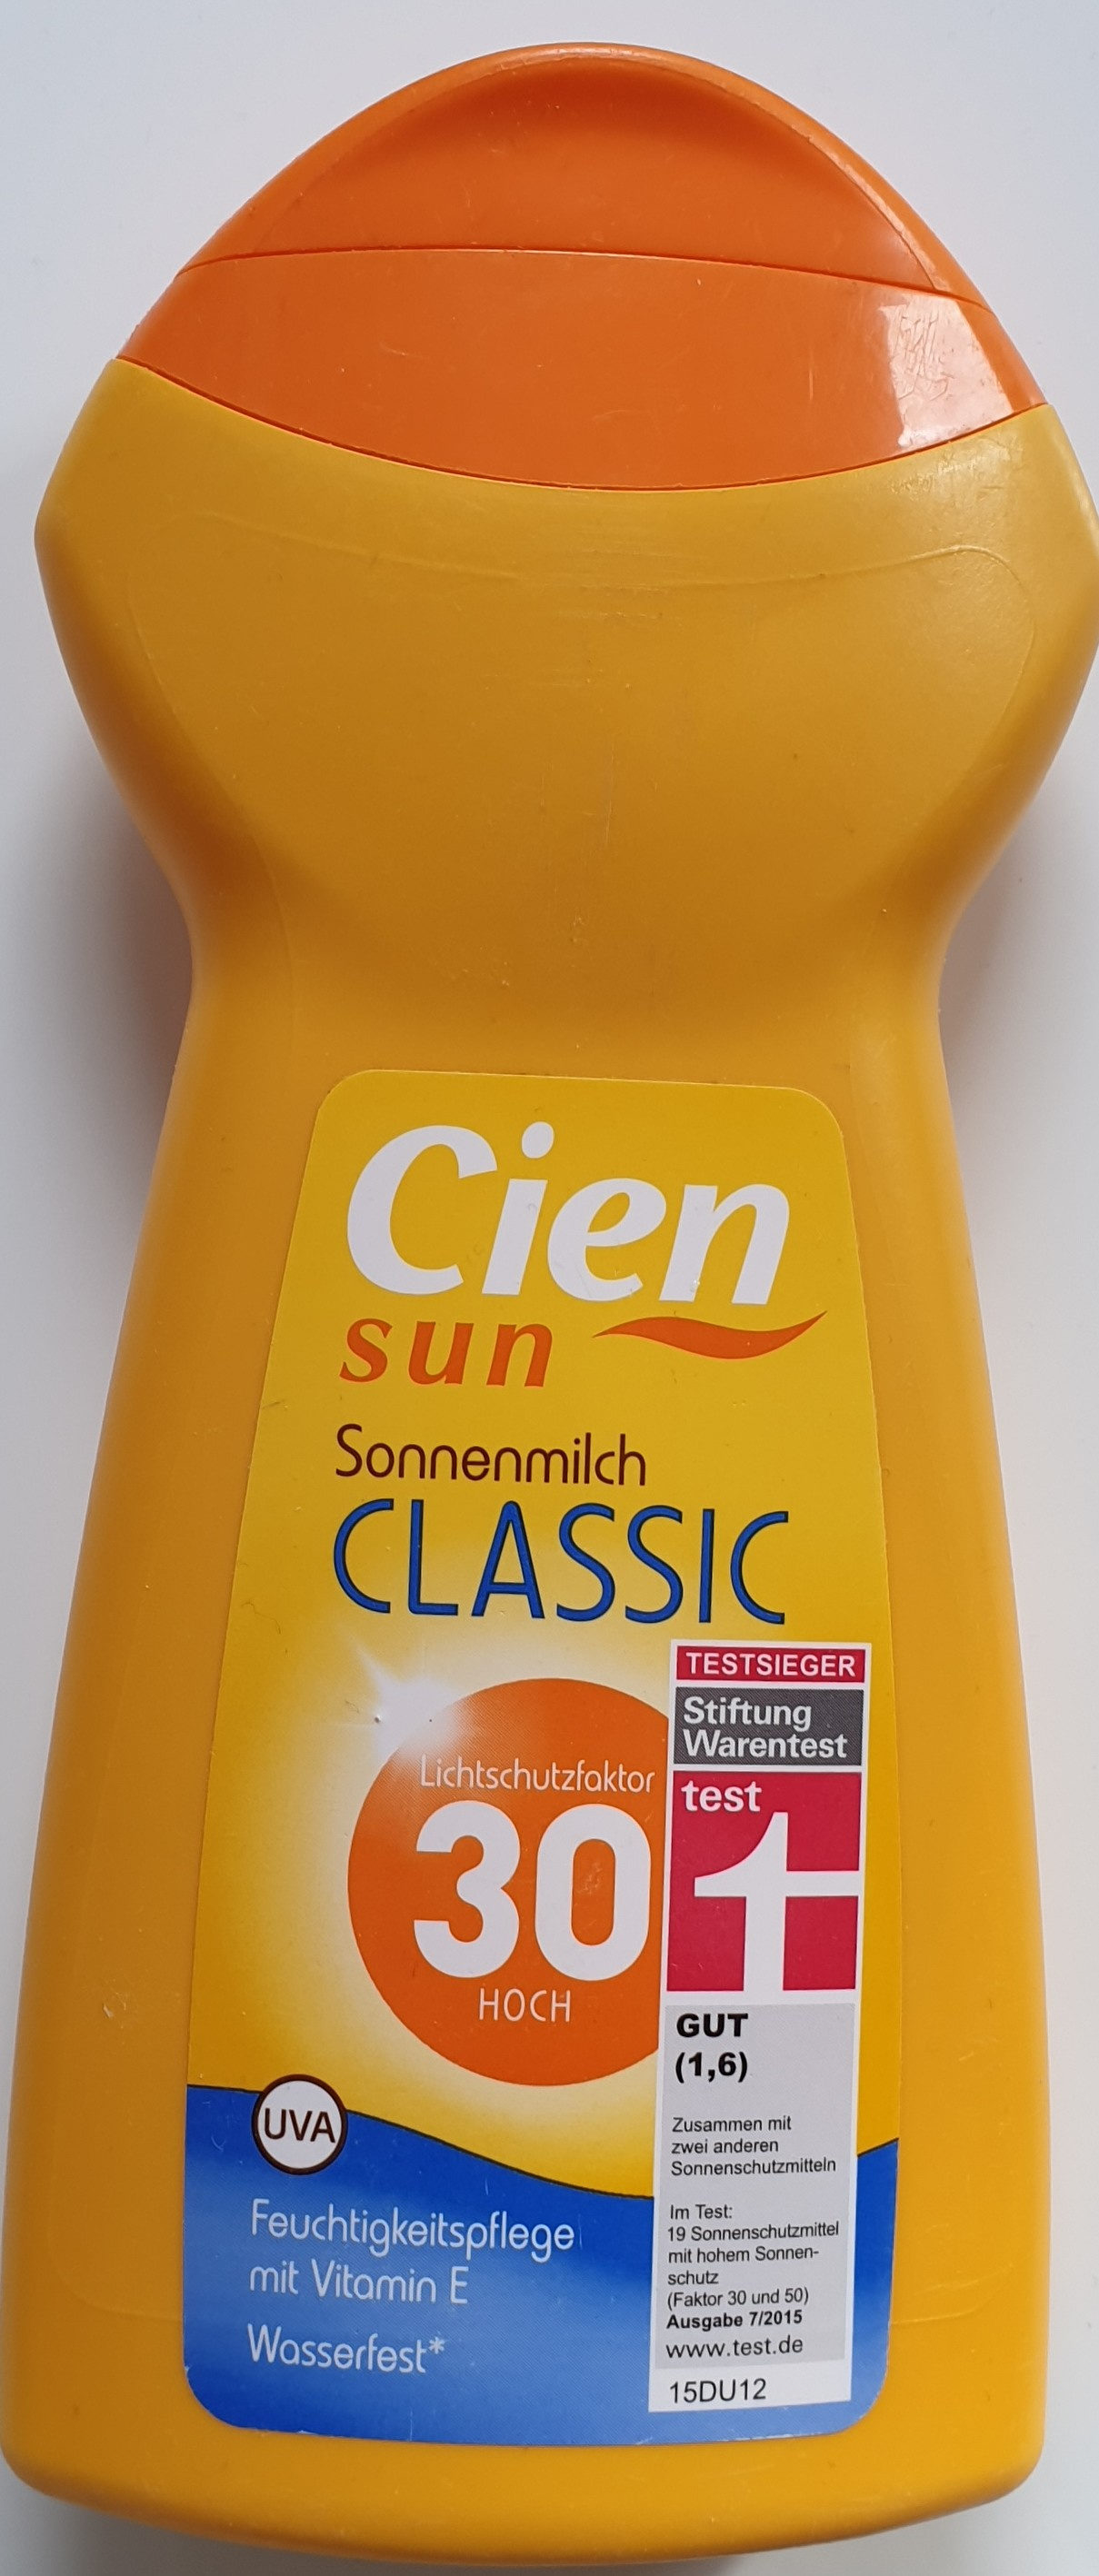 Sonnenmilch classic LSF 30 - Product - de